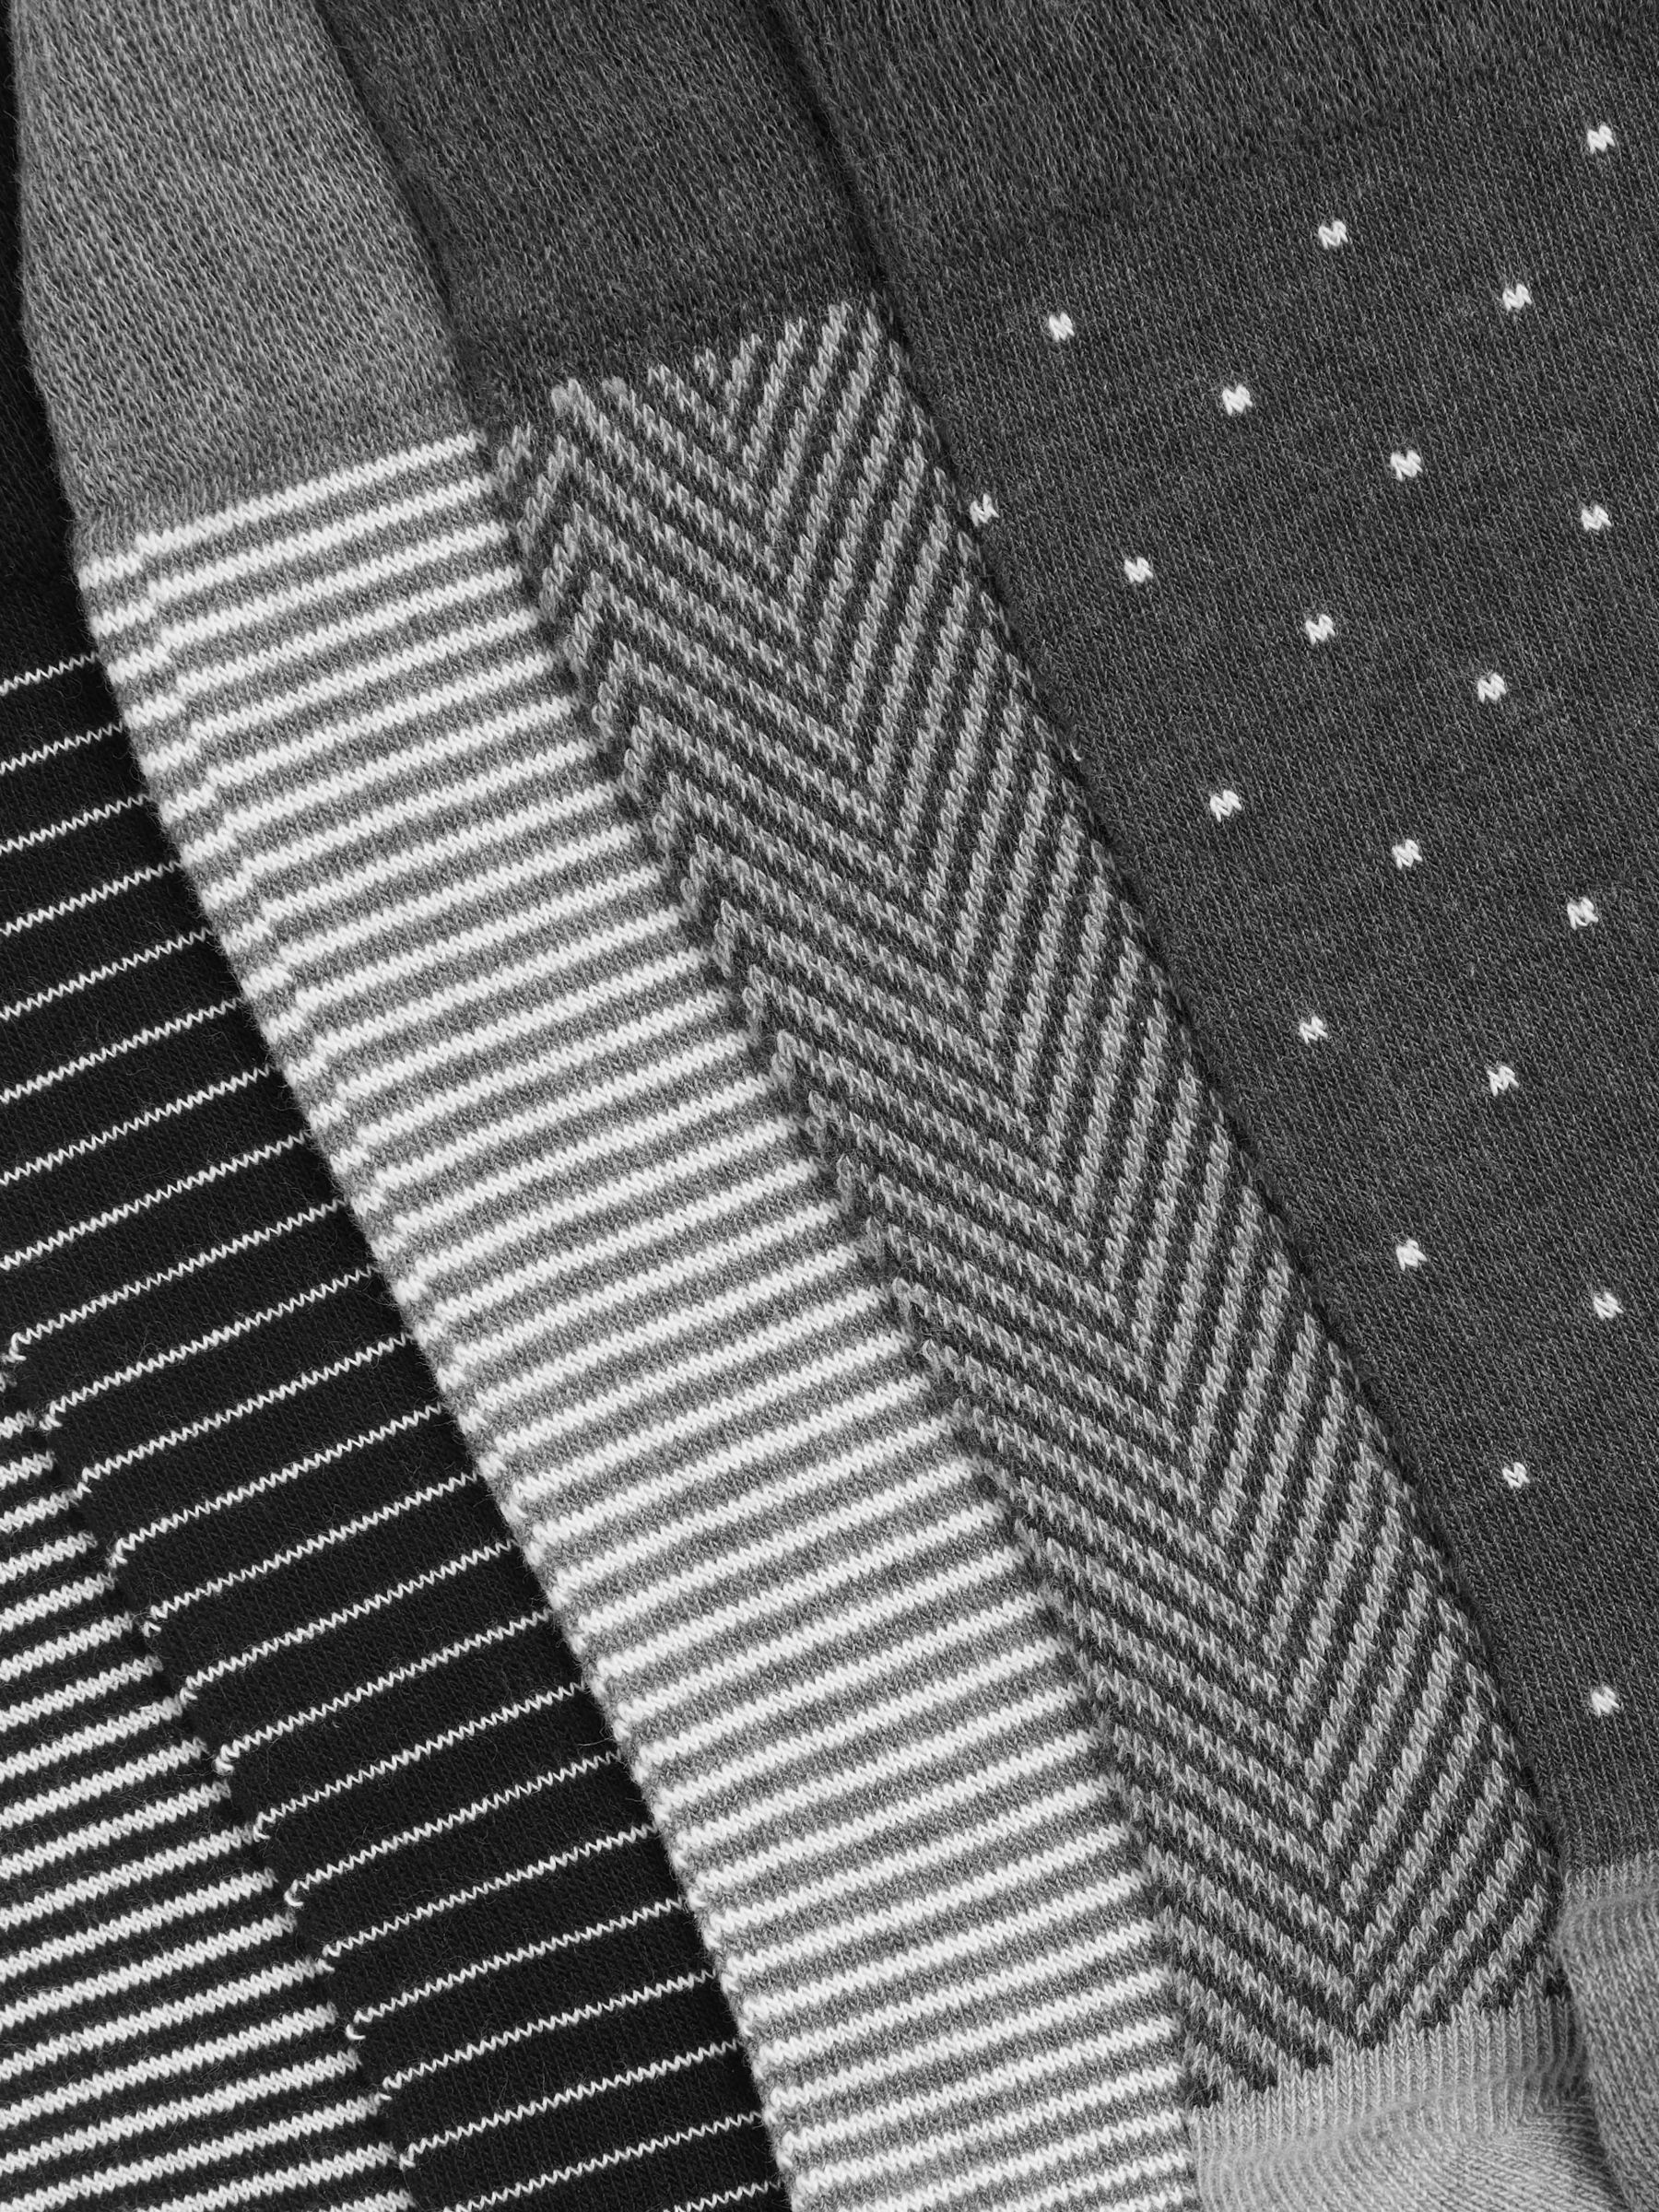 Buy John Lewis Stripe Spot Organic Cotton Rich Men's Socks, Pack of 5 Online at johnlewis.com